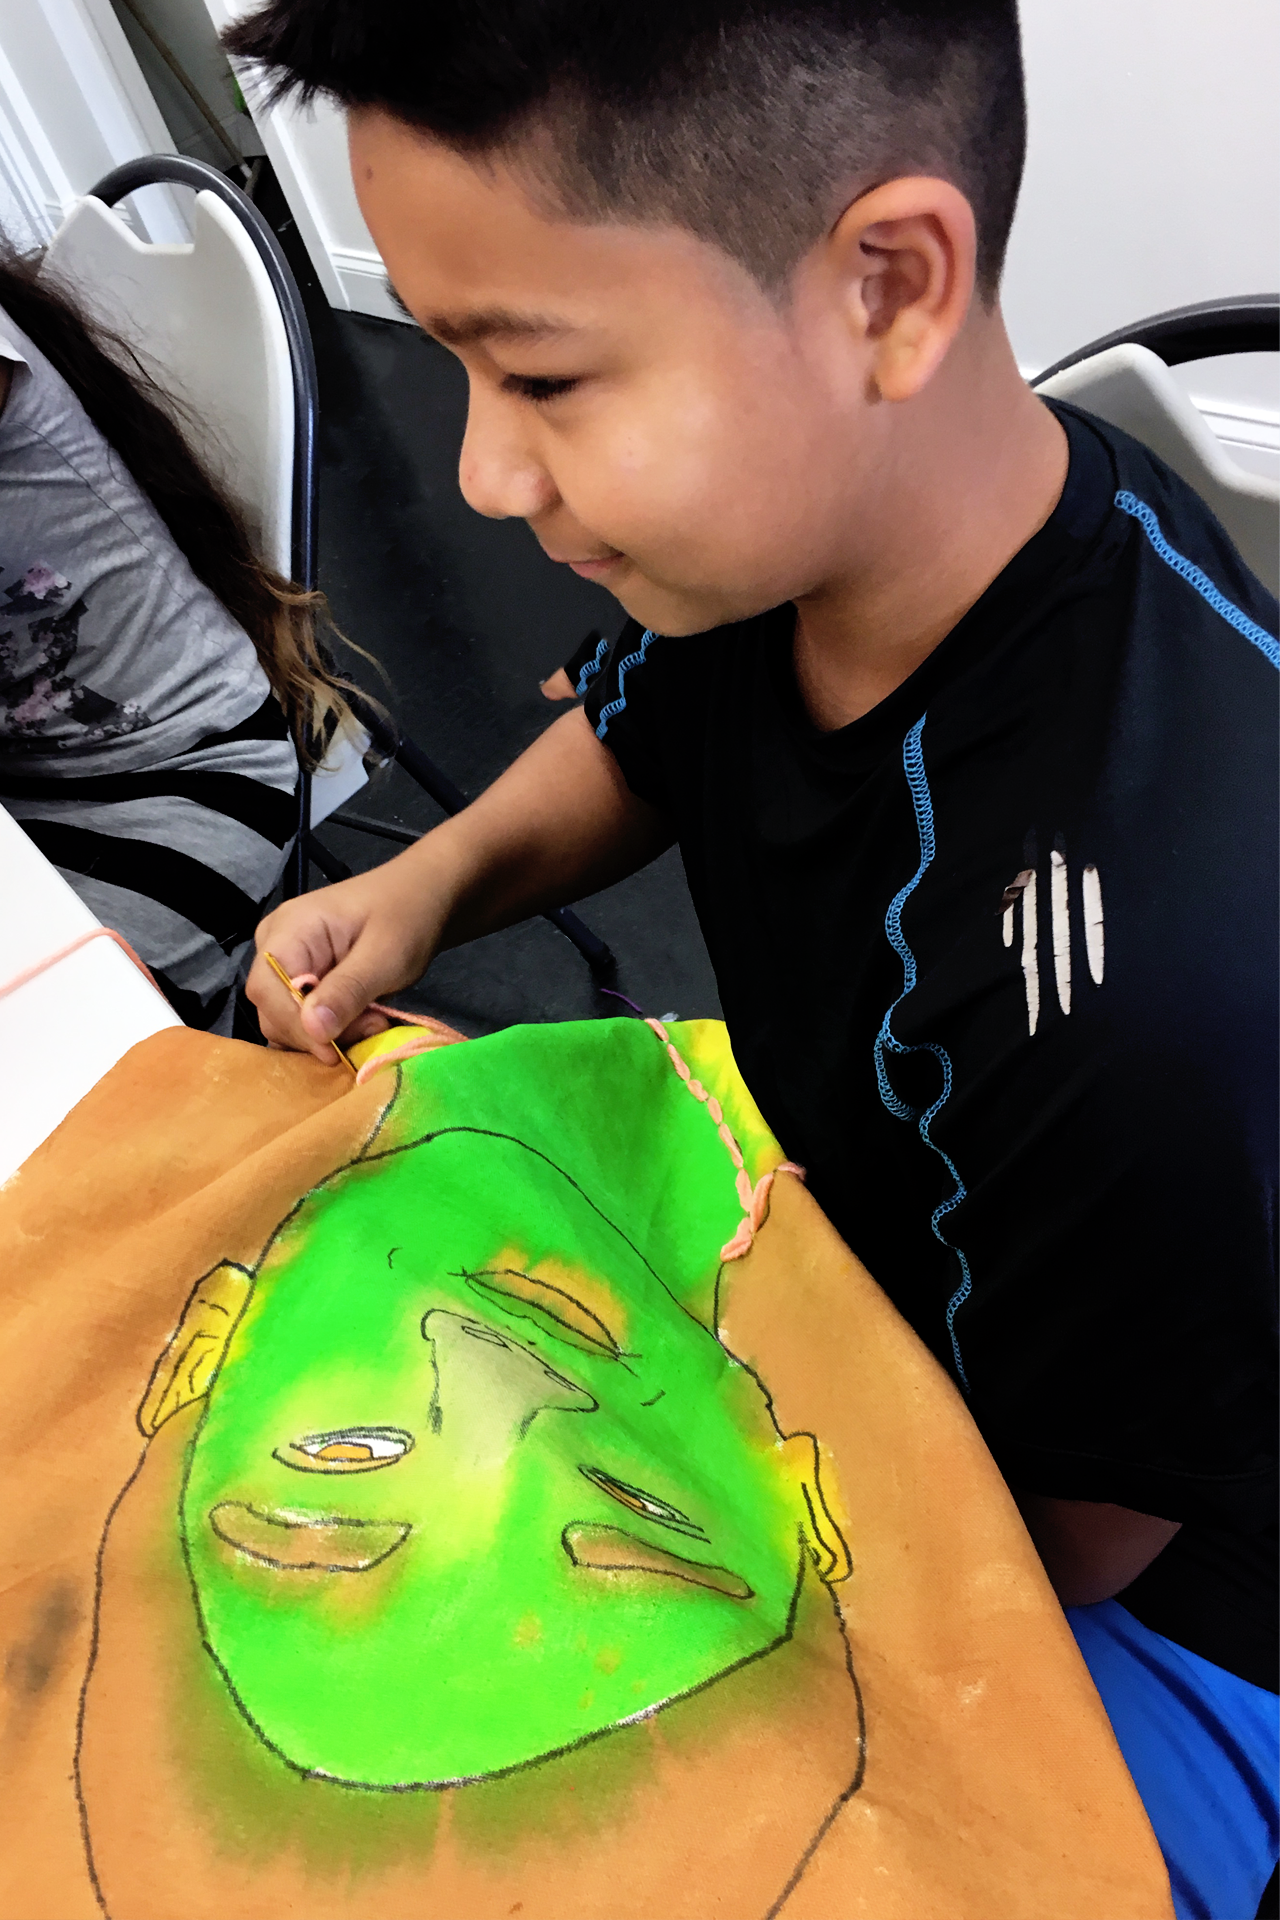 Make It! Kid's Art Portfolio